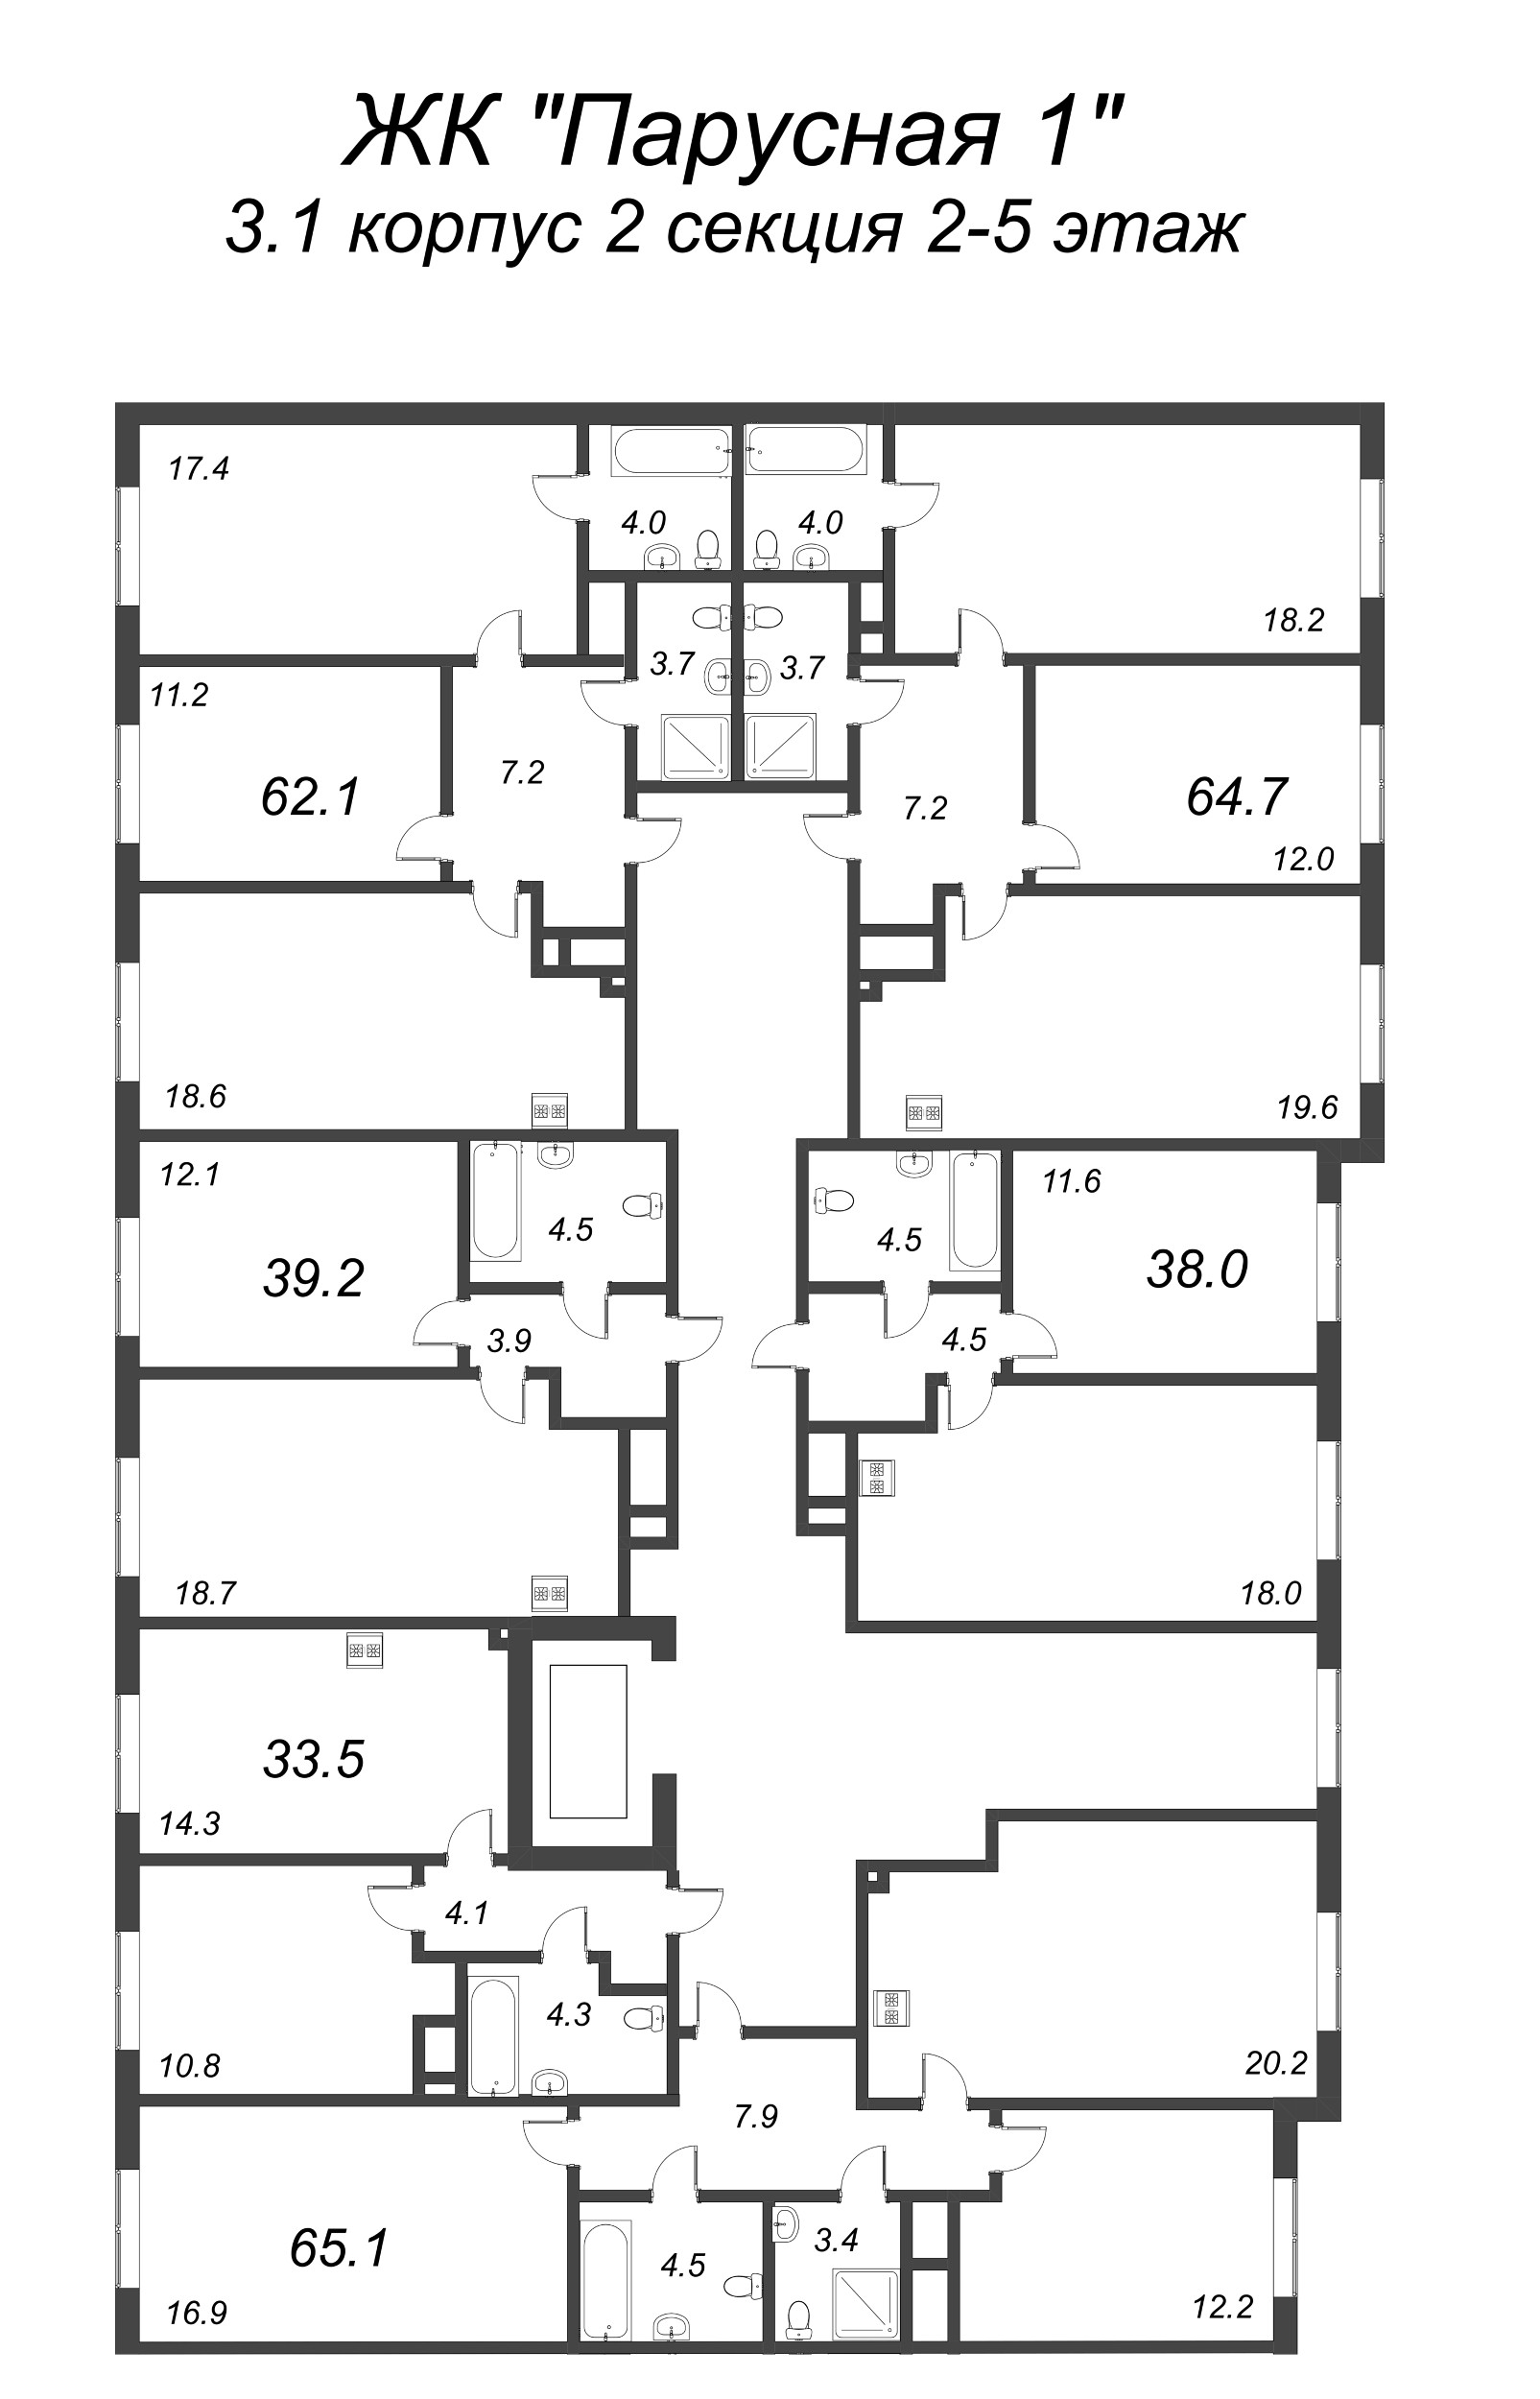 2-комнатная (Евро) квартира, 39.2 м² - планировка этажа